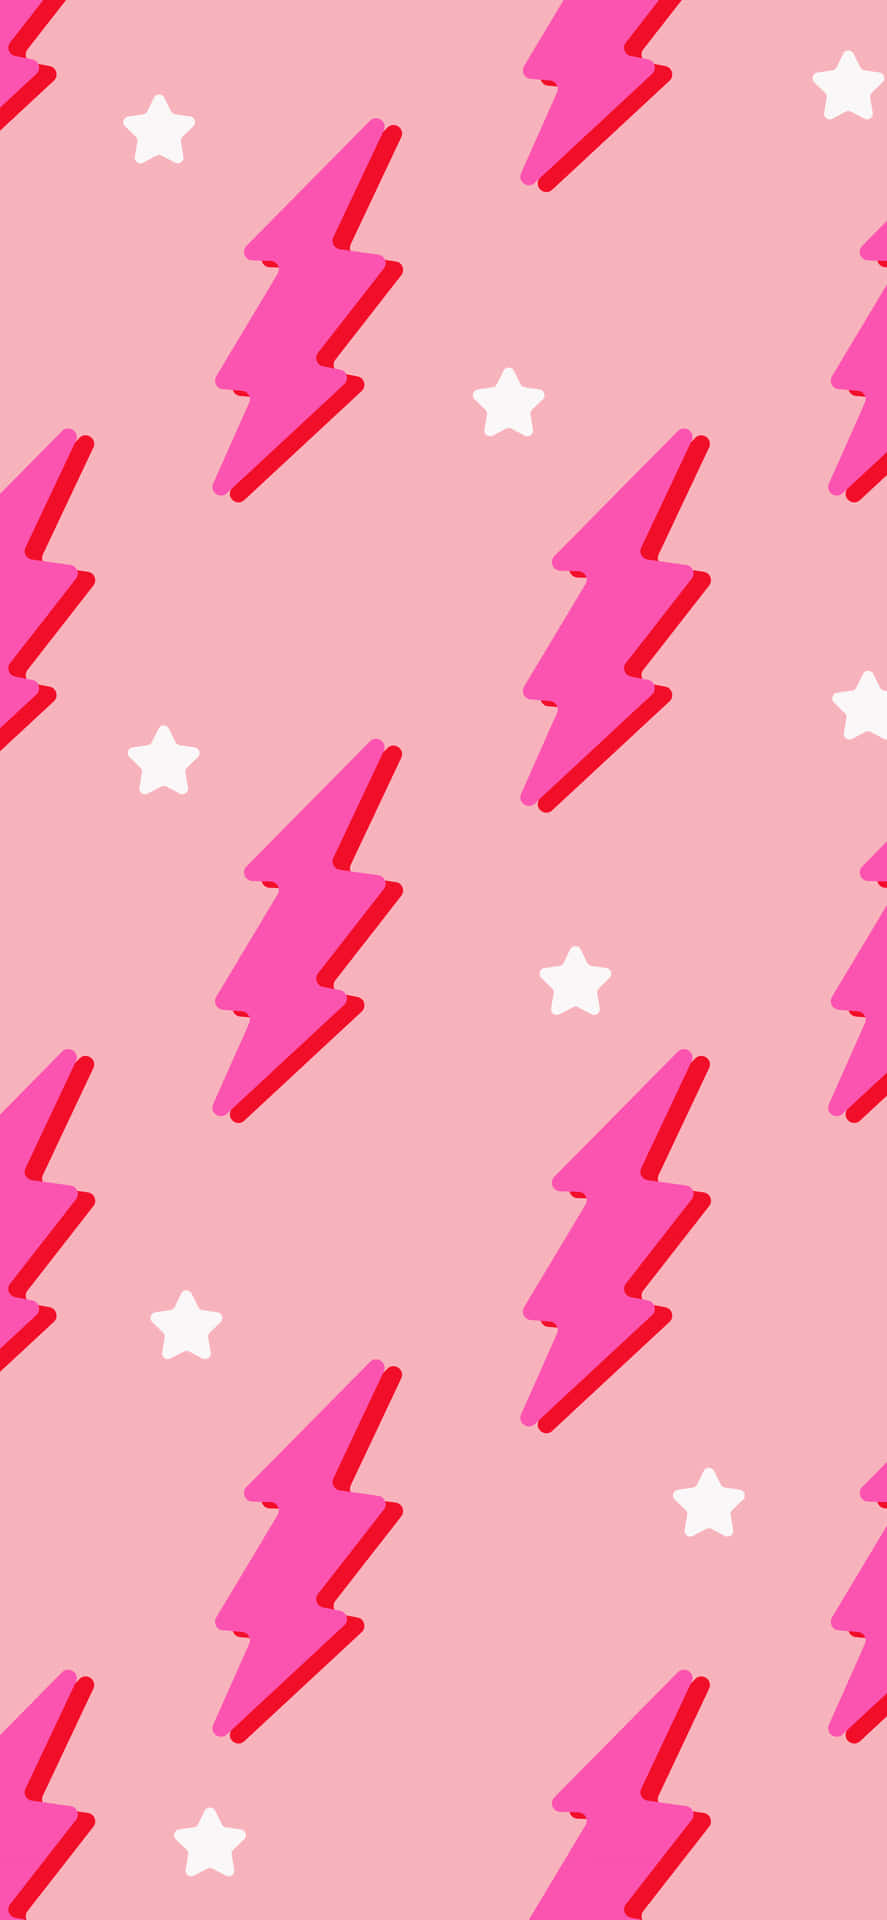 pink lightning bolts on a pink background